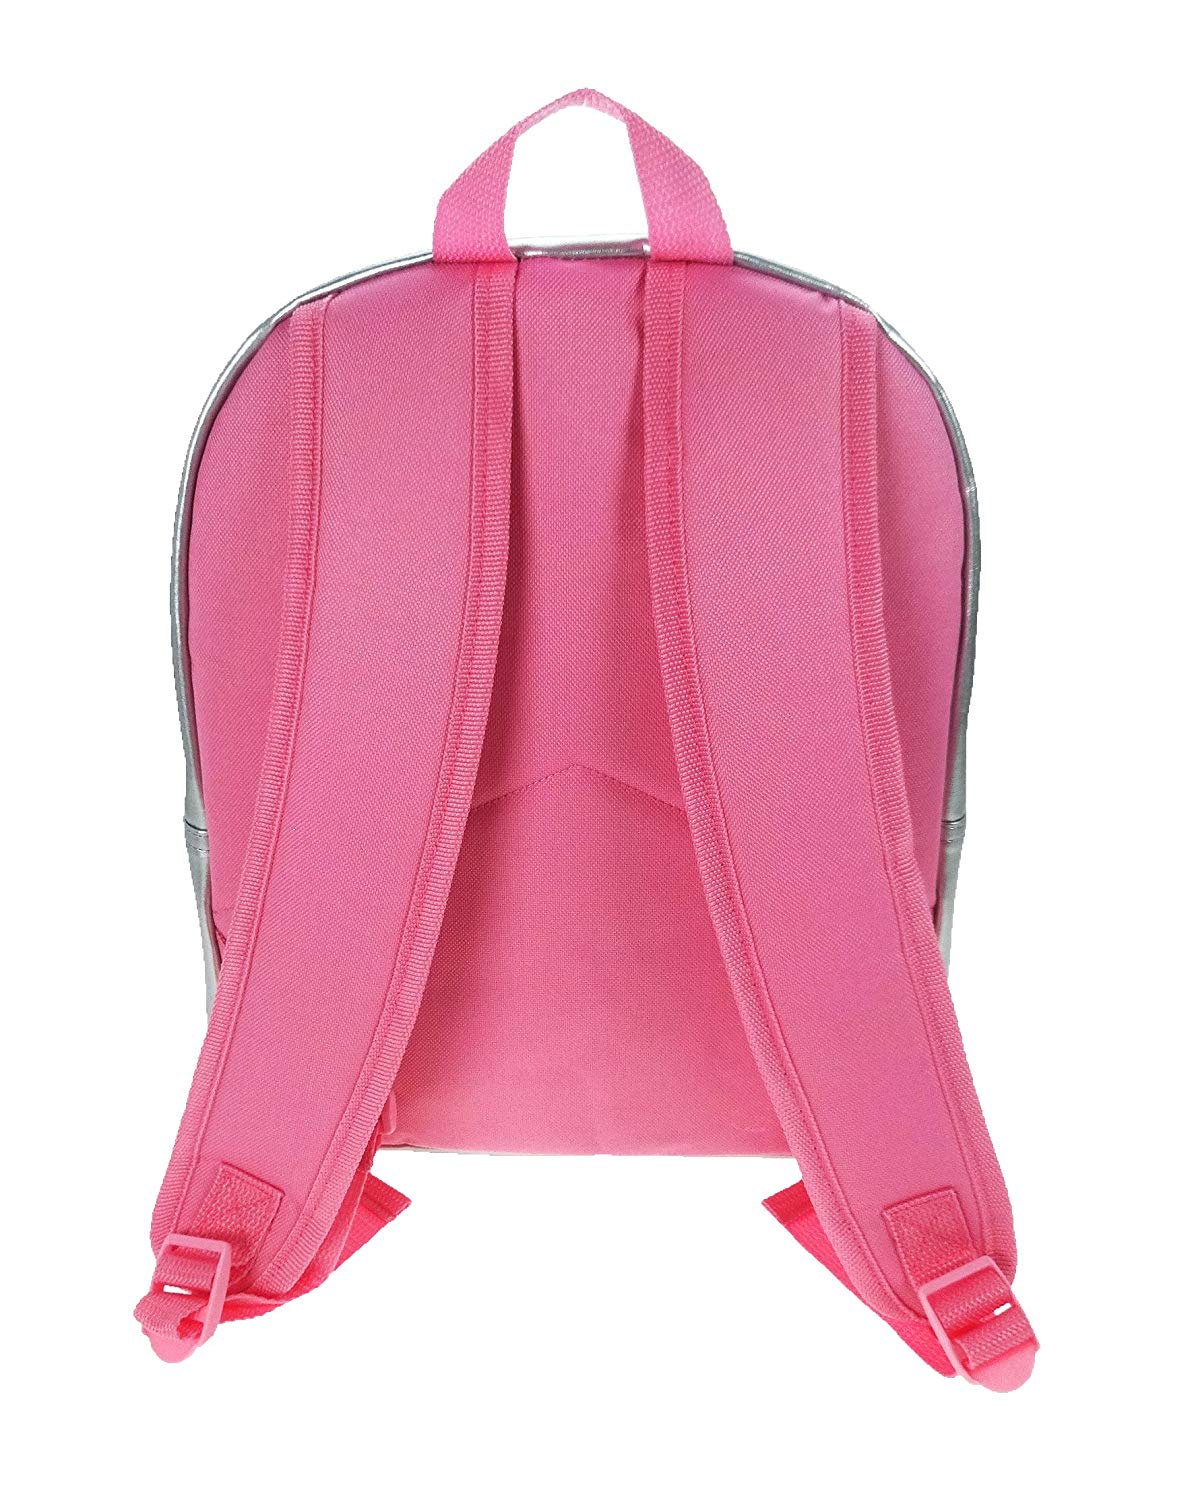 My Little Pony Novelty Silver School Bag Rucksack Backpack